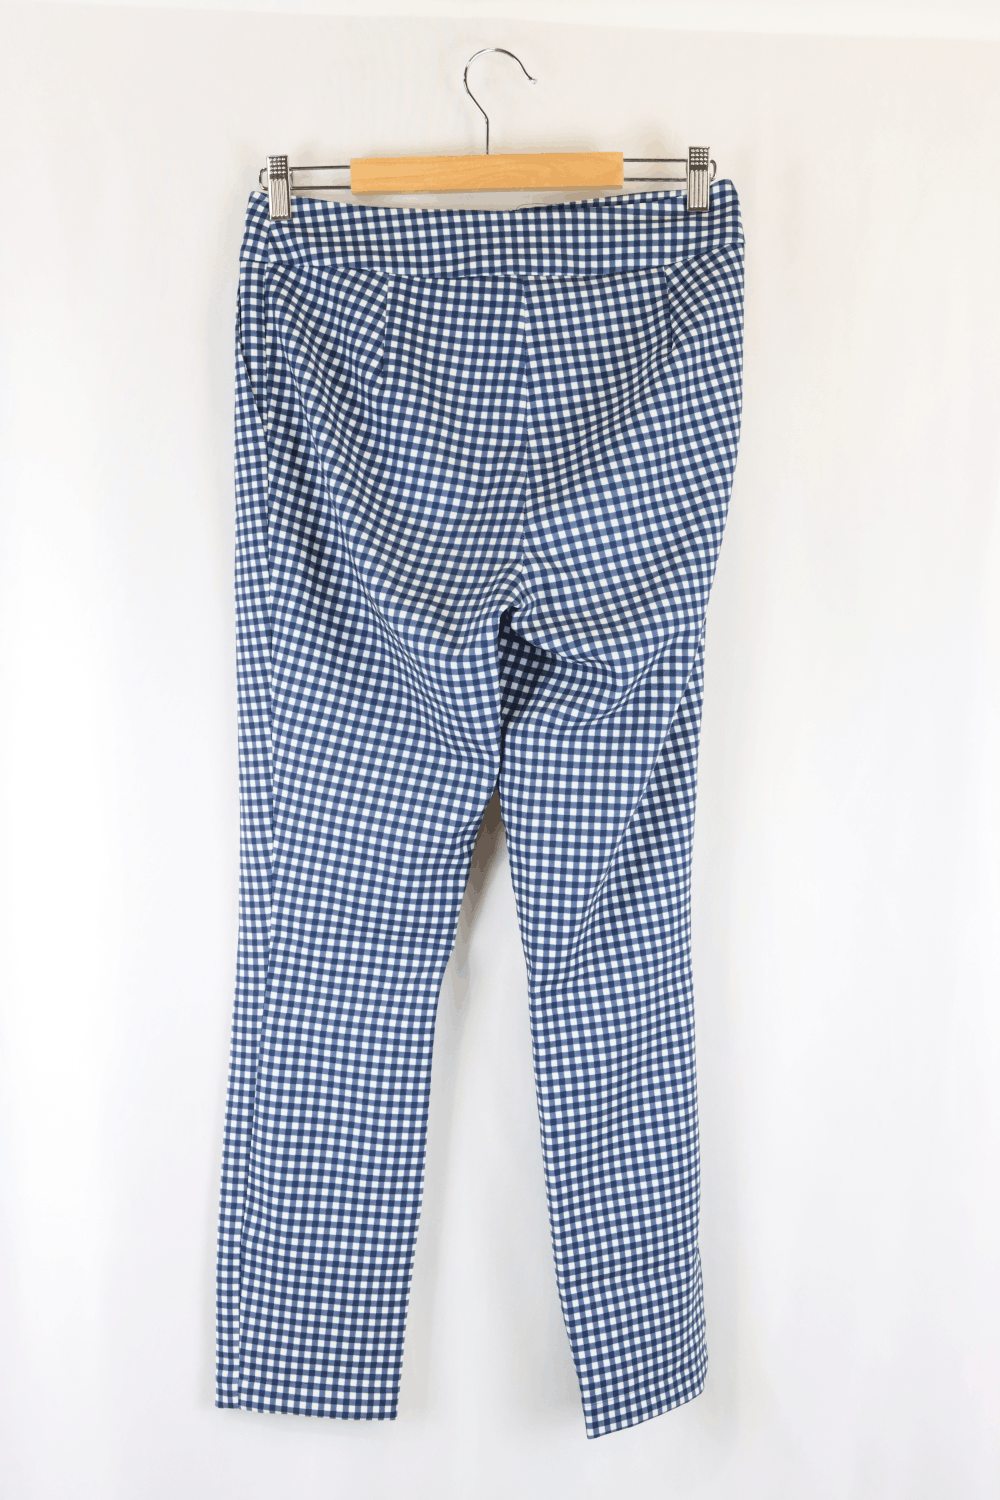 Tokito Blue And White Striped Pants S